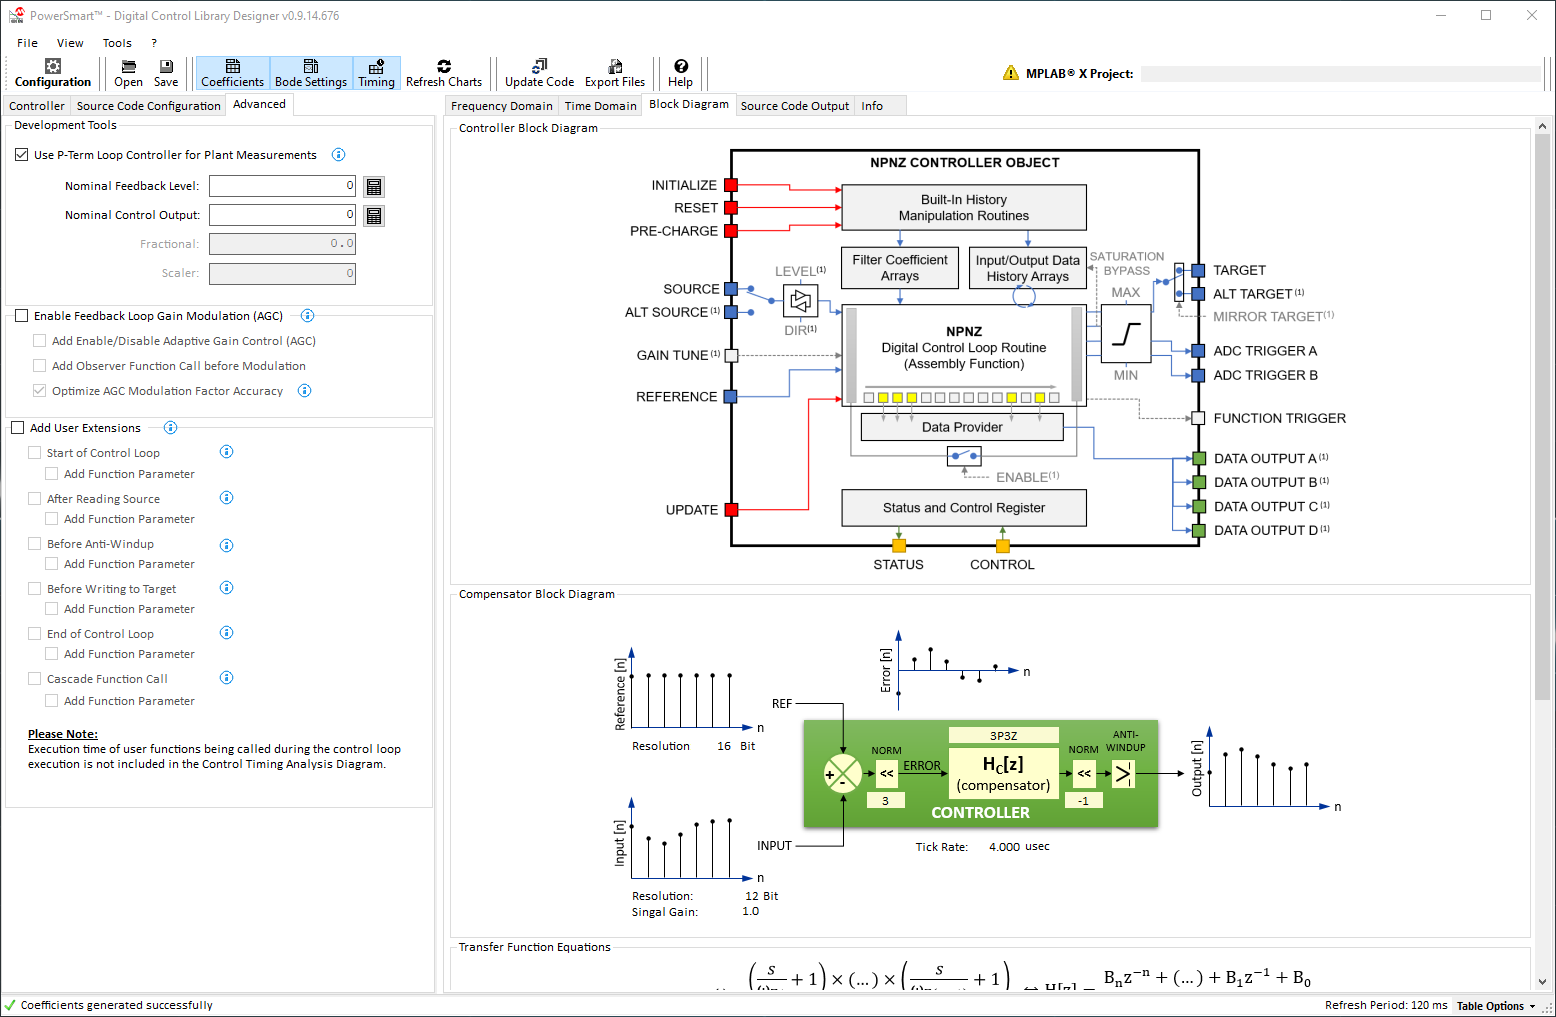 MPLAB® PowerSmart™ Digital Control Library Designer - Execution Timing Diagram